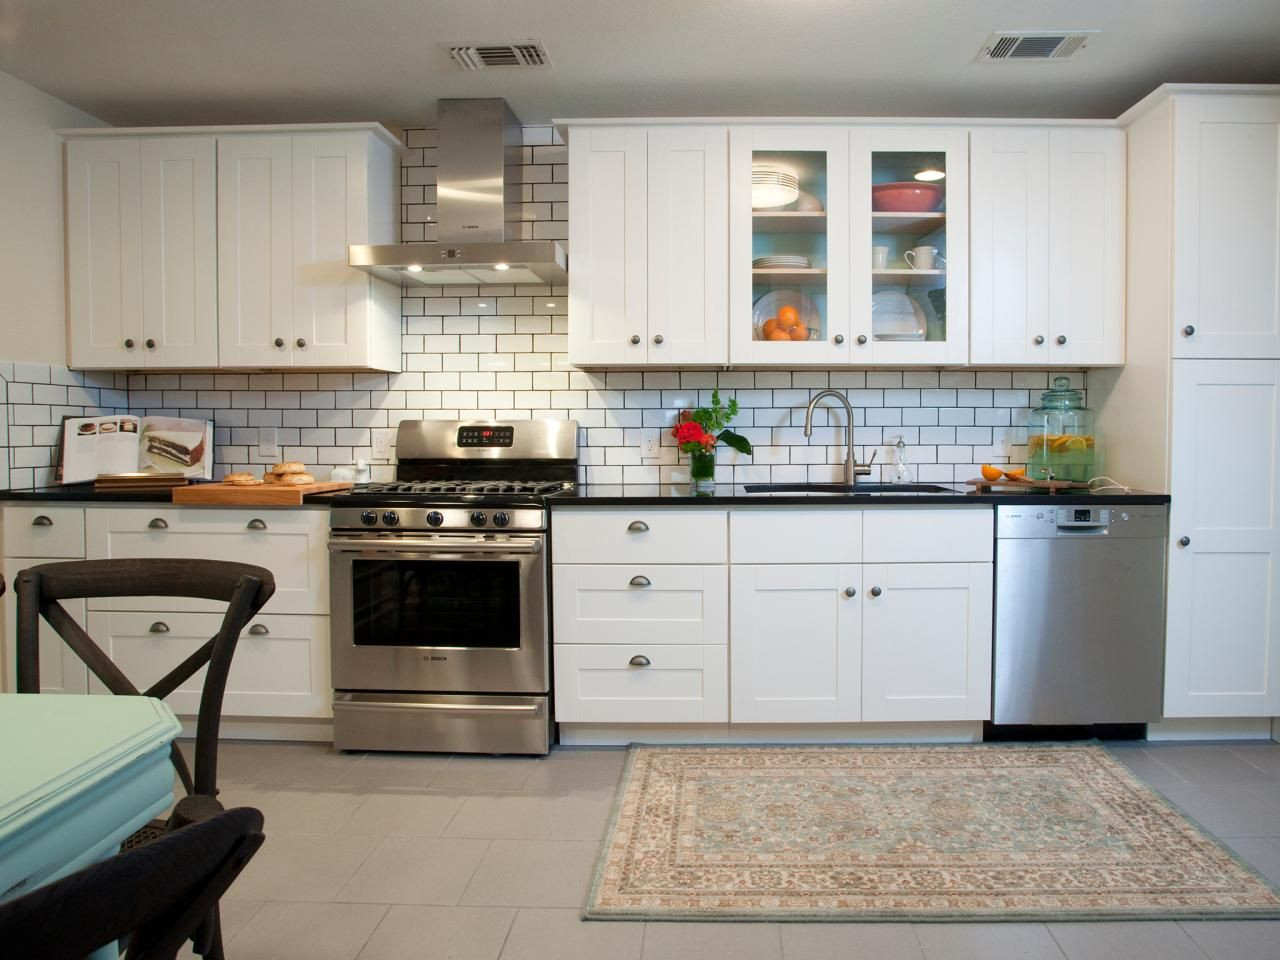 White Kitchen Tile Backsplash
 Dress Your Kitchen In Style With Some White Subway Tiles